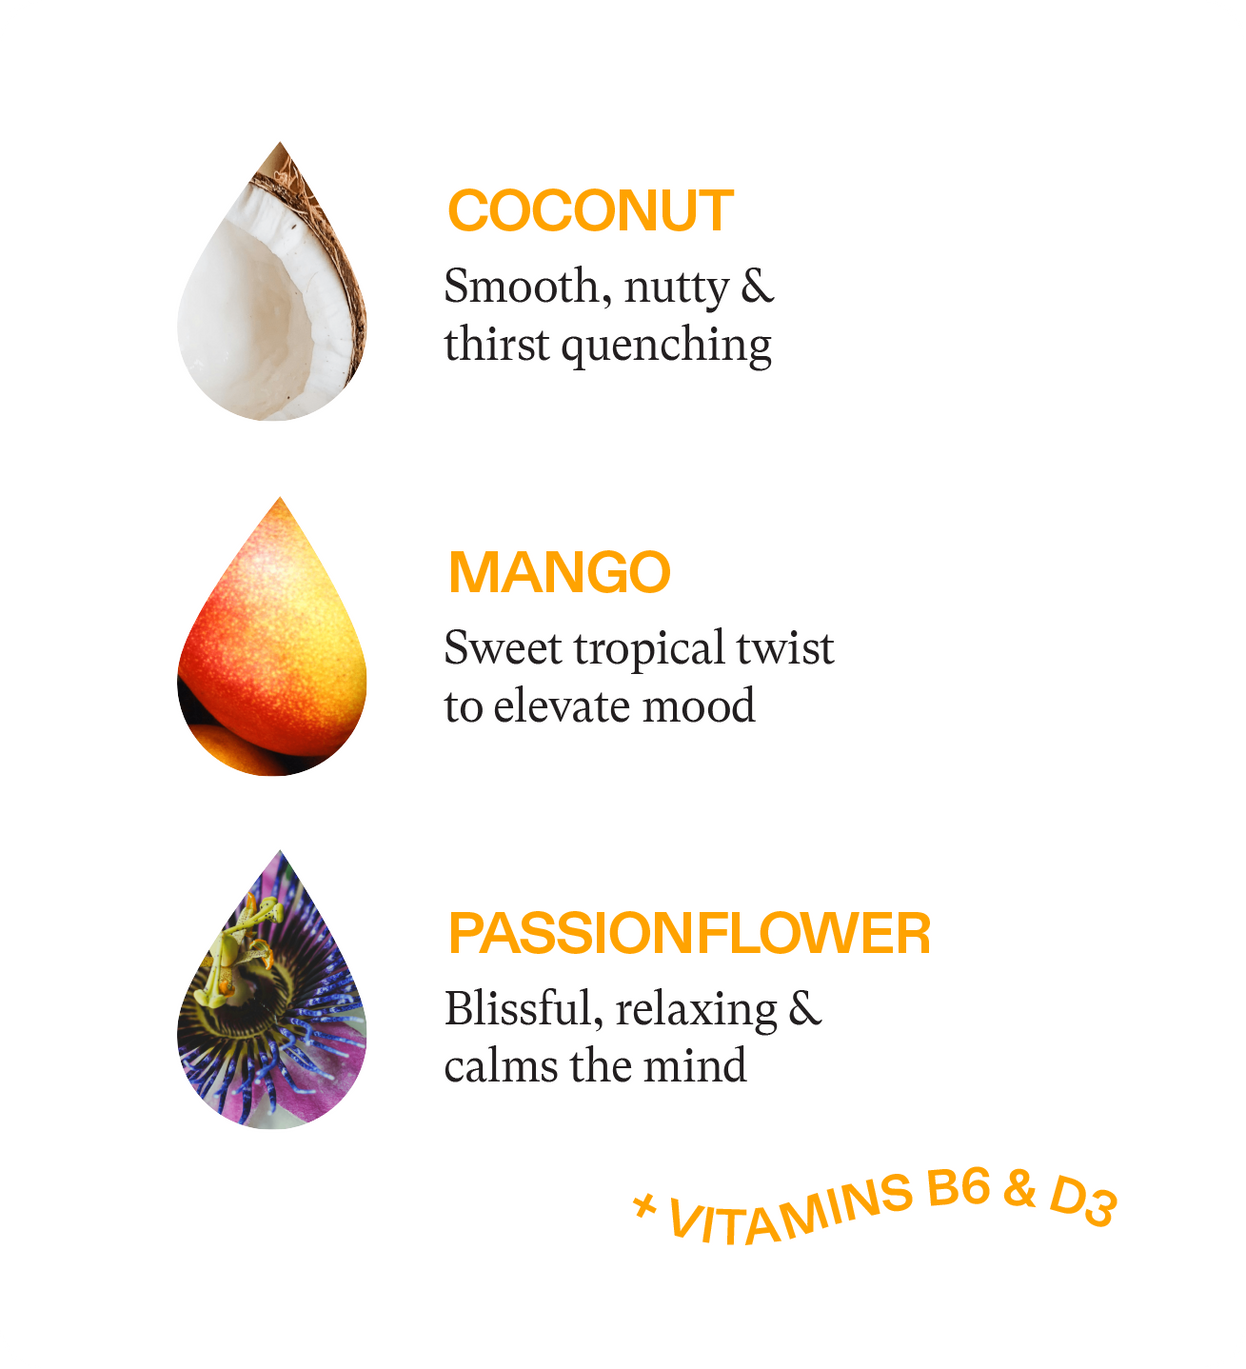 Coconut, Mango, & Passionflower